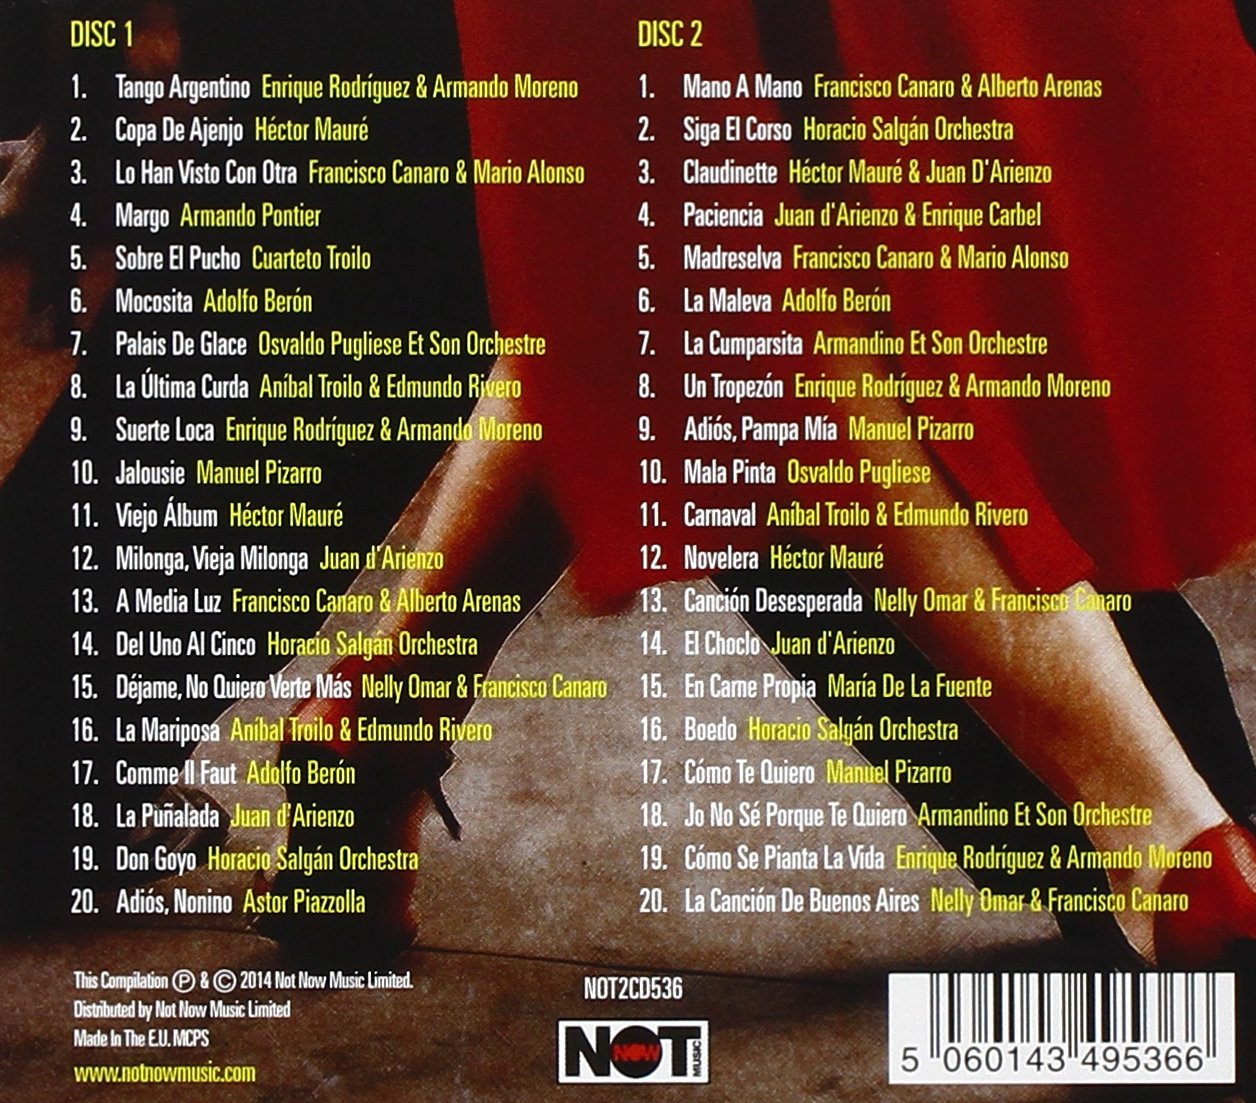 STRICTLY TANGO (3 CDS)